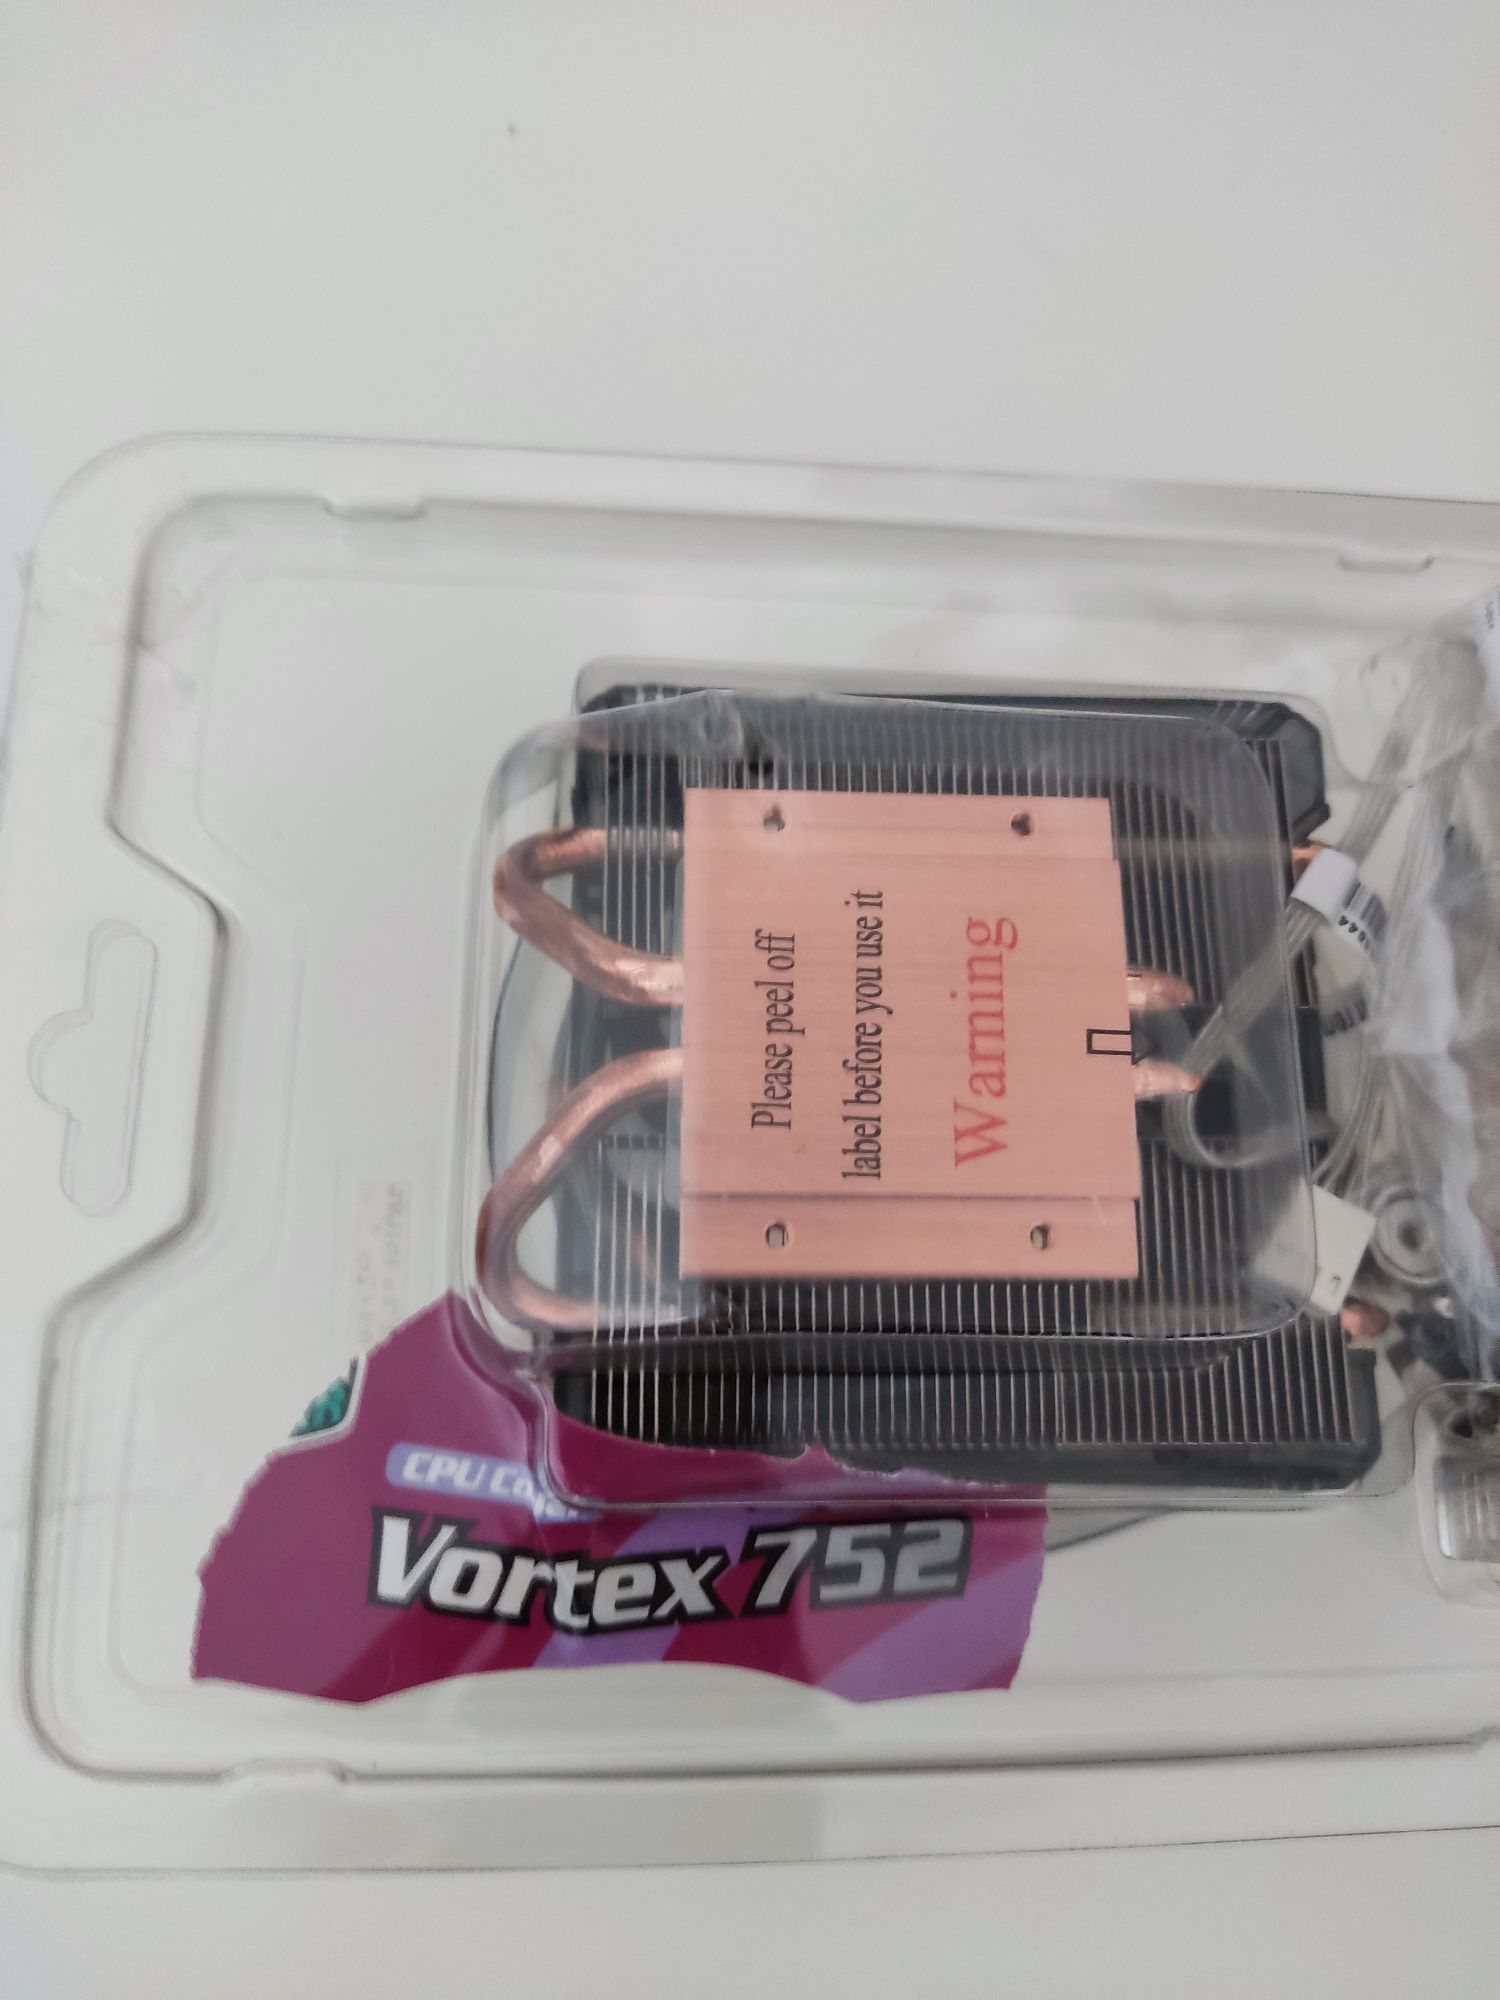 Dissipador Cooler Master Vortex 752,  Novo -  CPU LGA 775